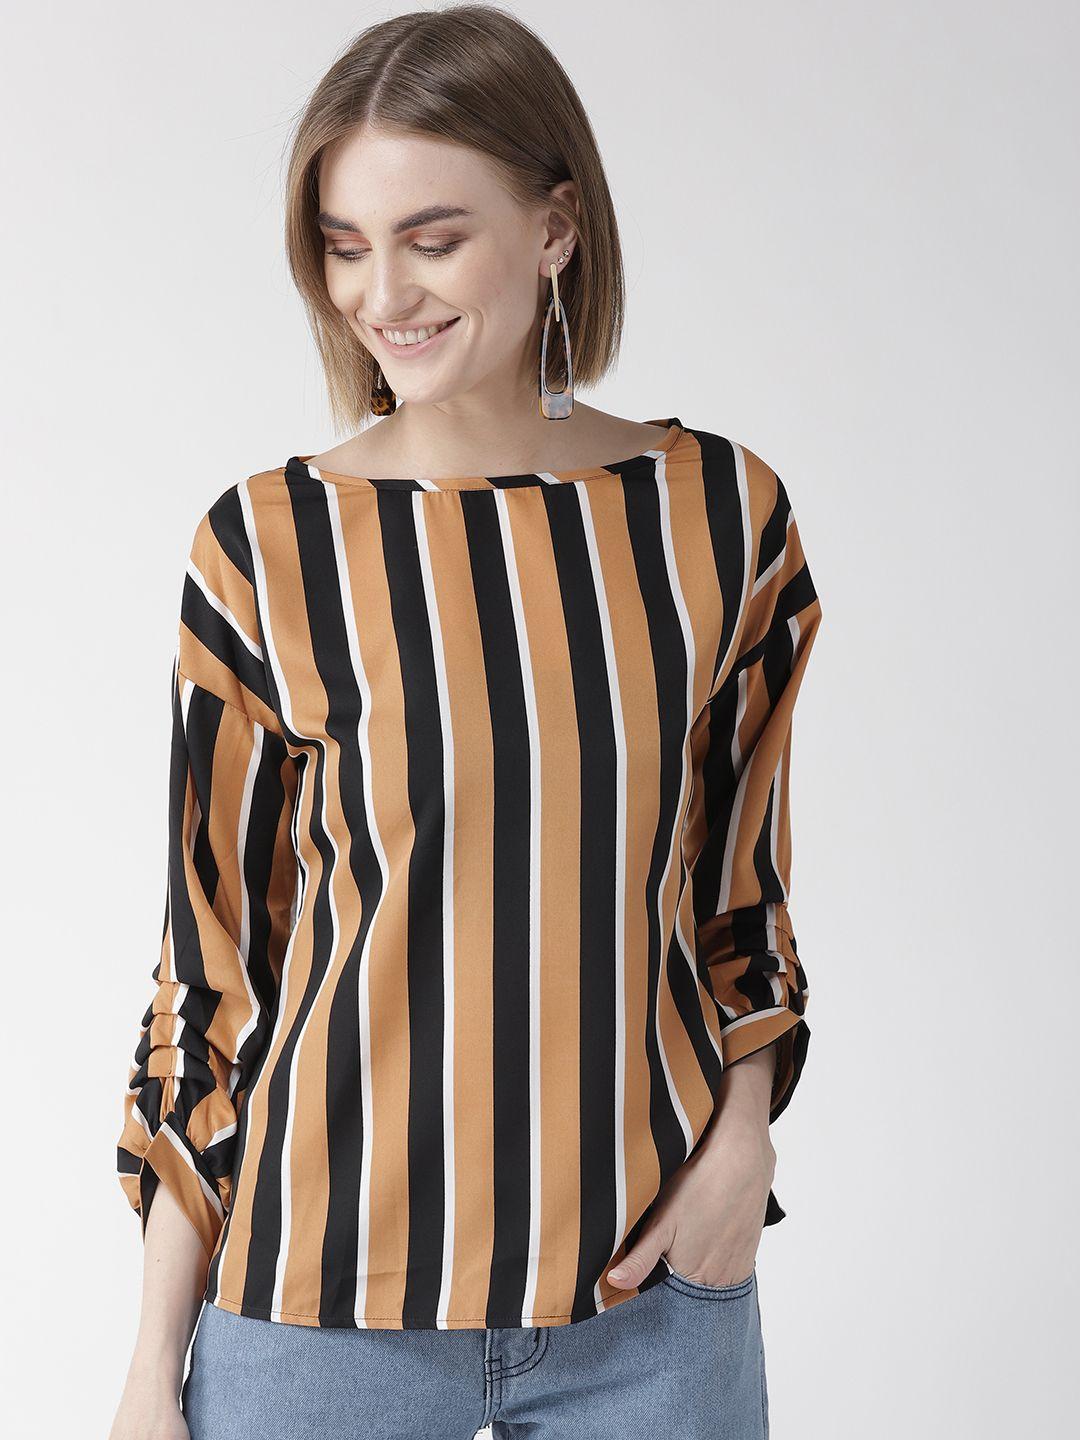 style quotient women camel brown & black striped regular top